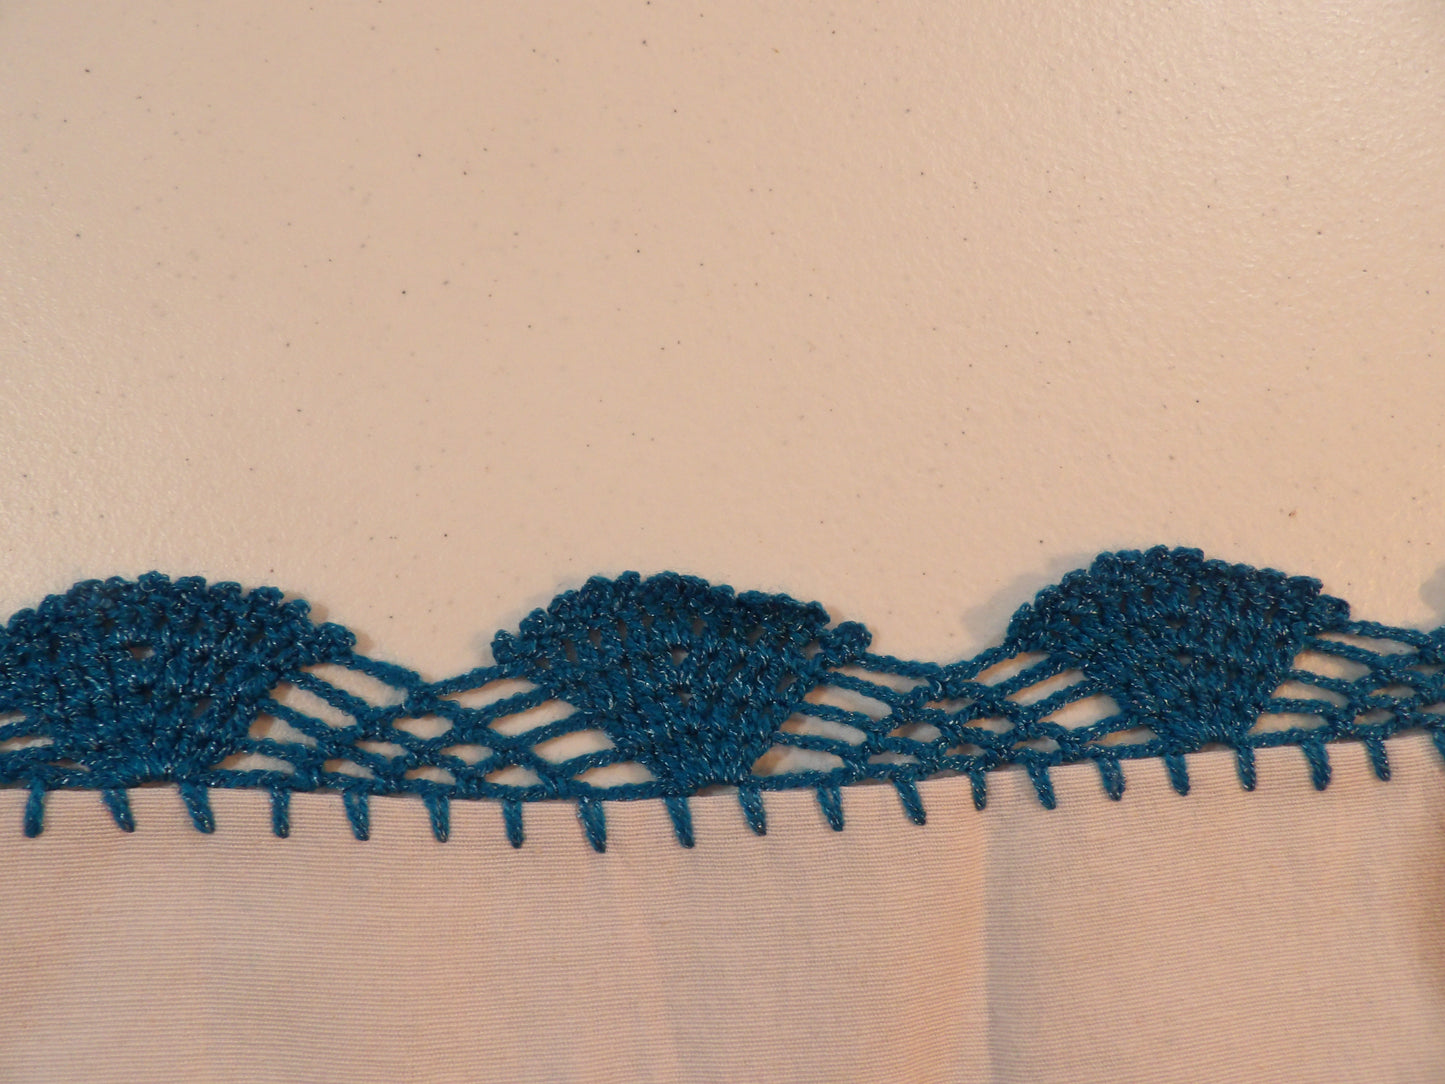 Servilletas Bordadas / Hand Embroidered Linen Cloths